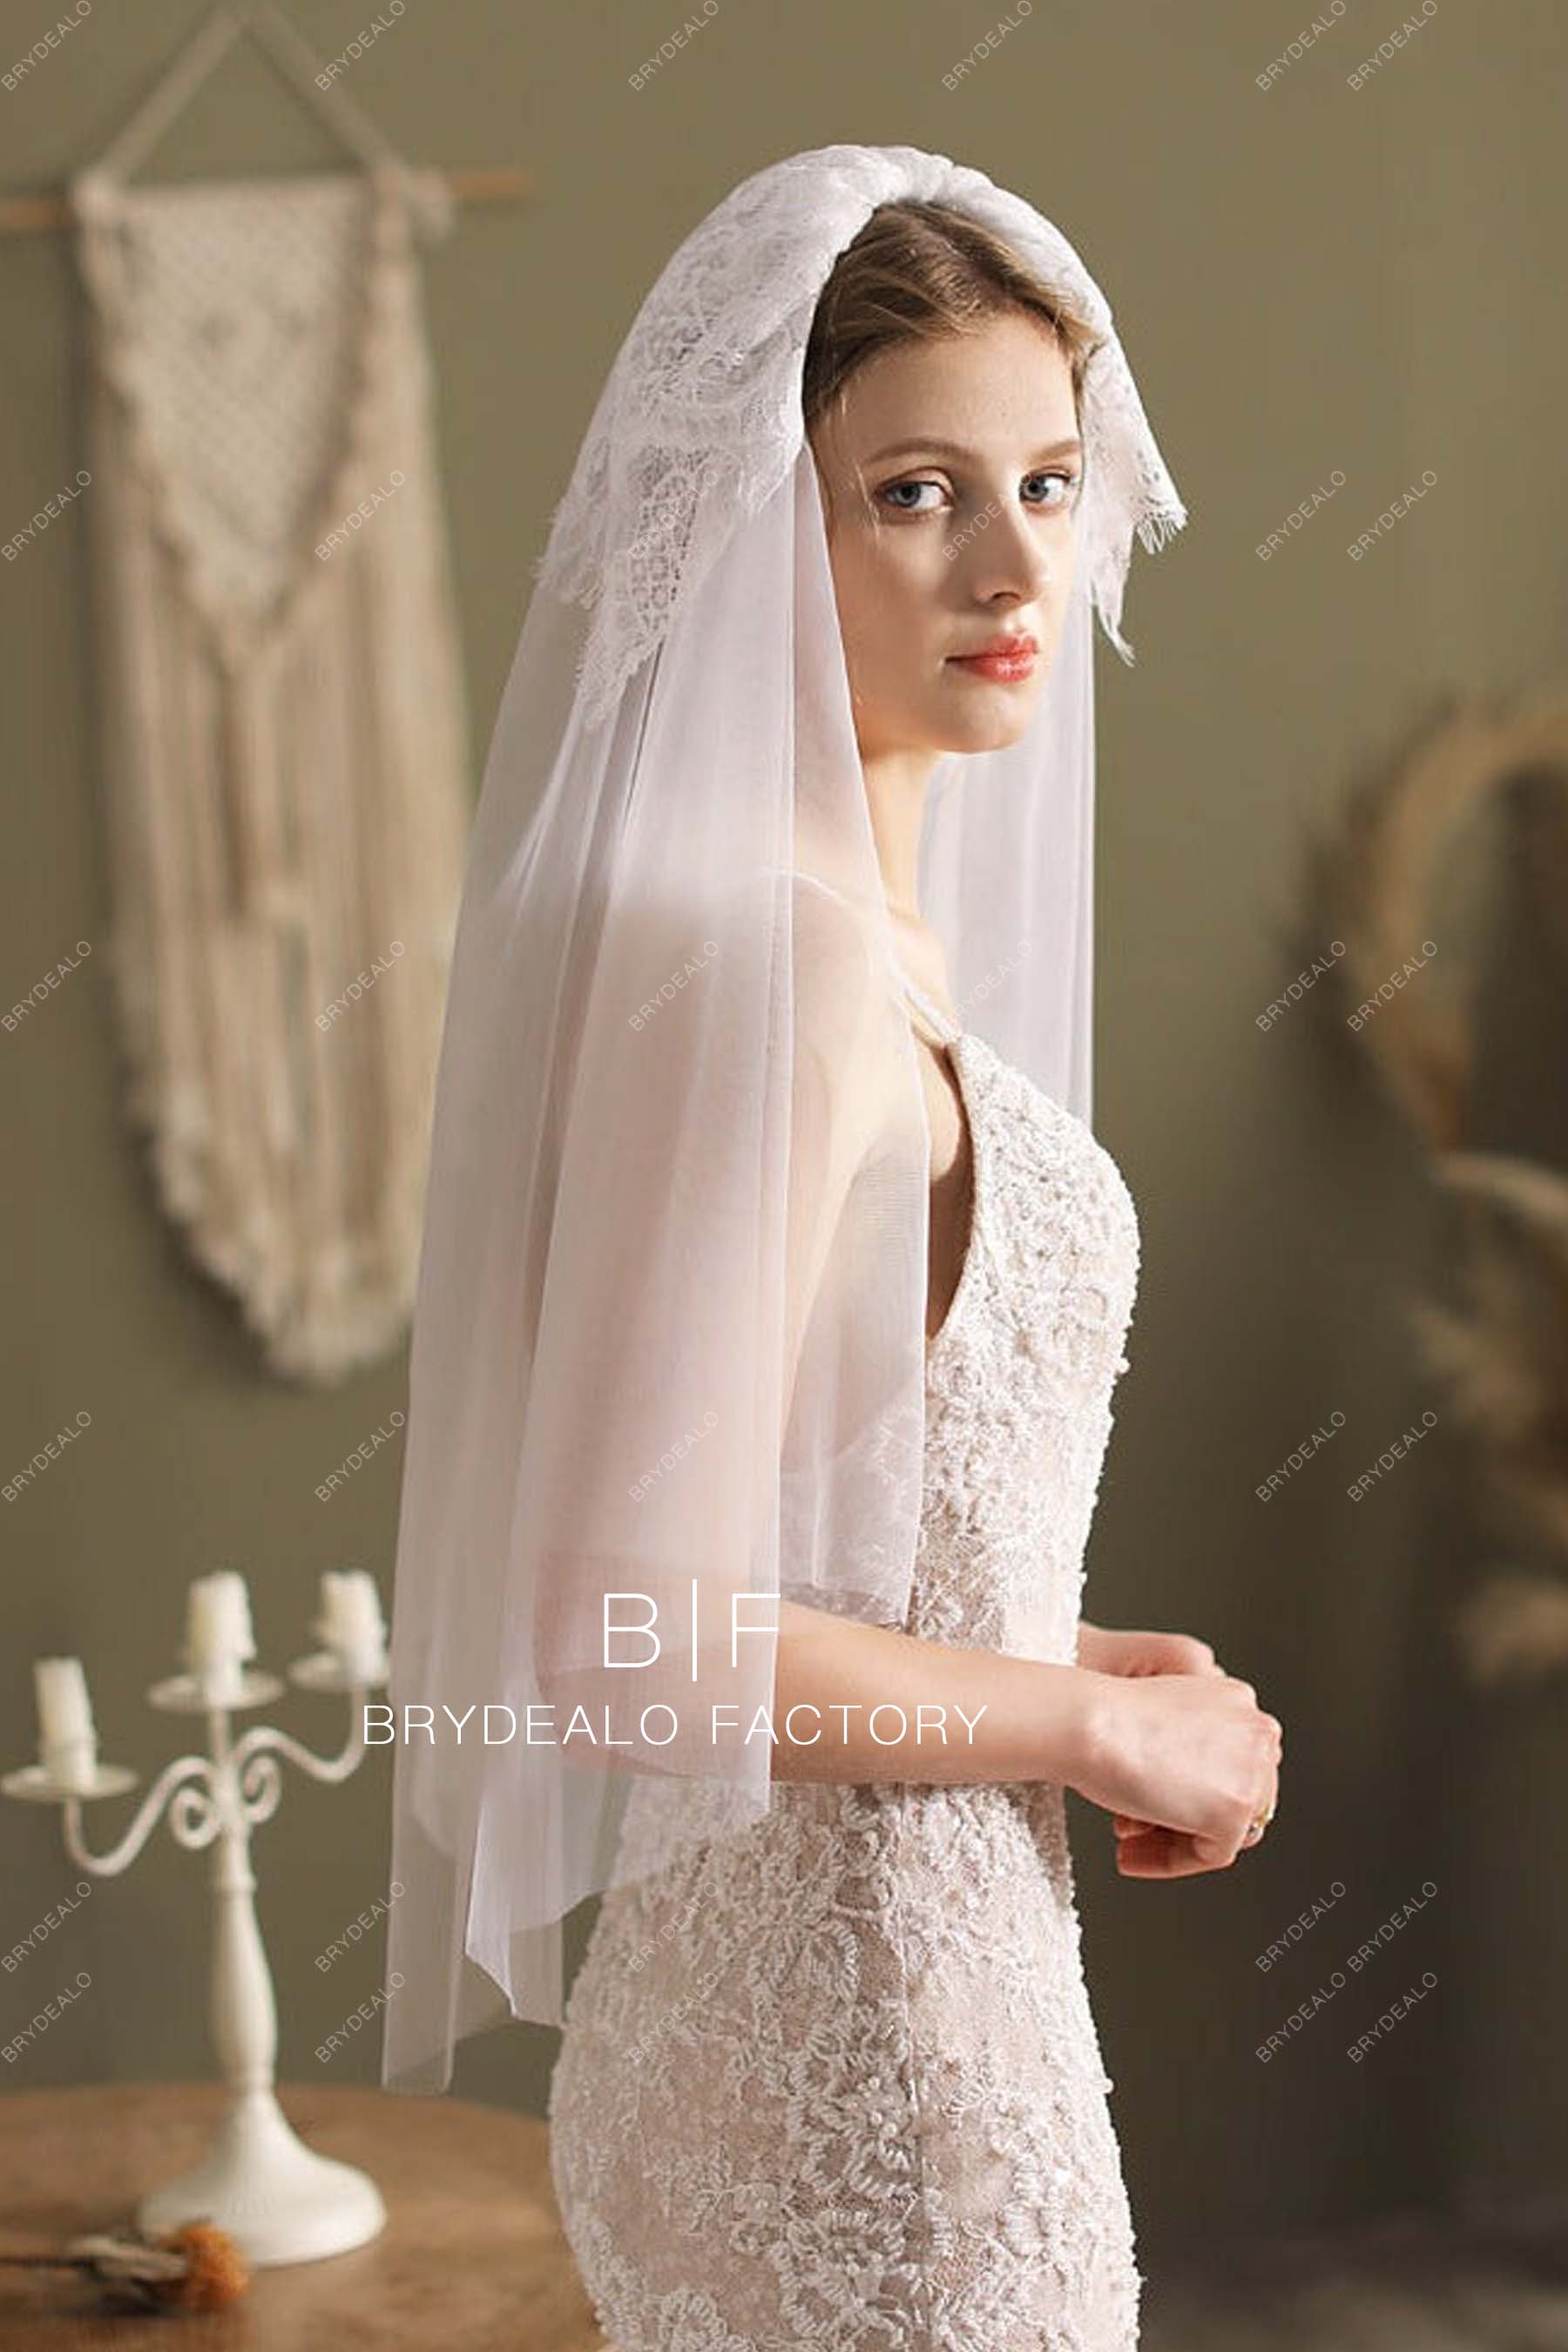 Elbow Length Wedding Veil